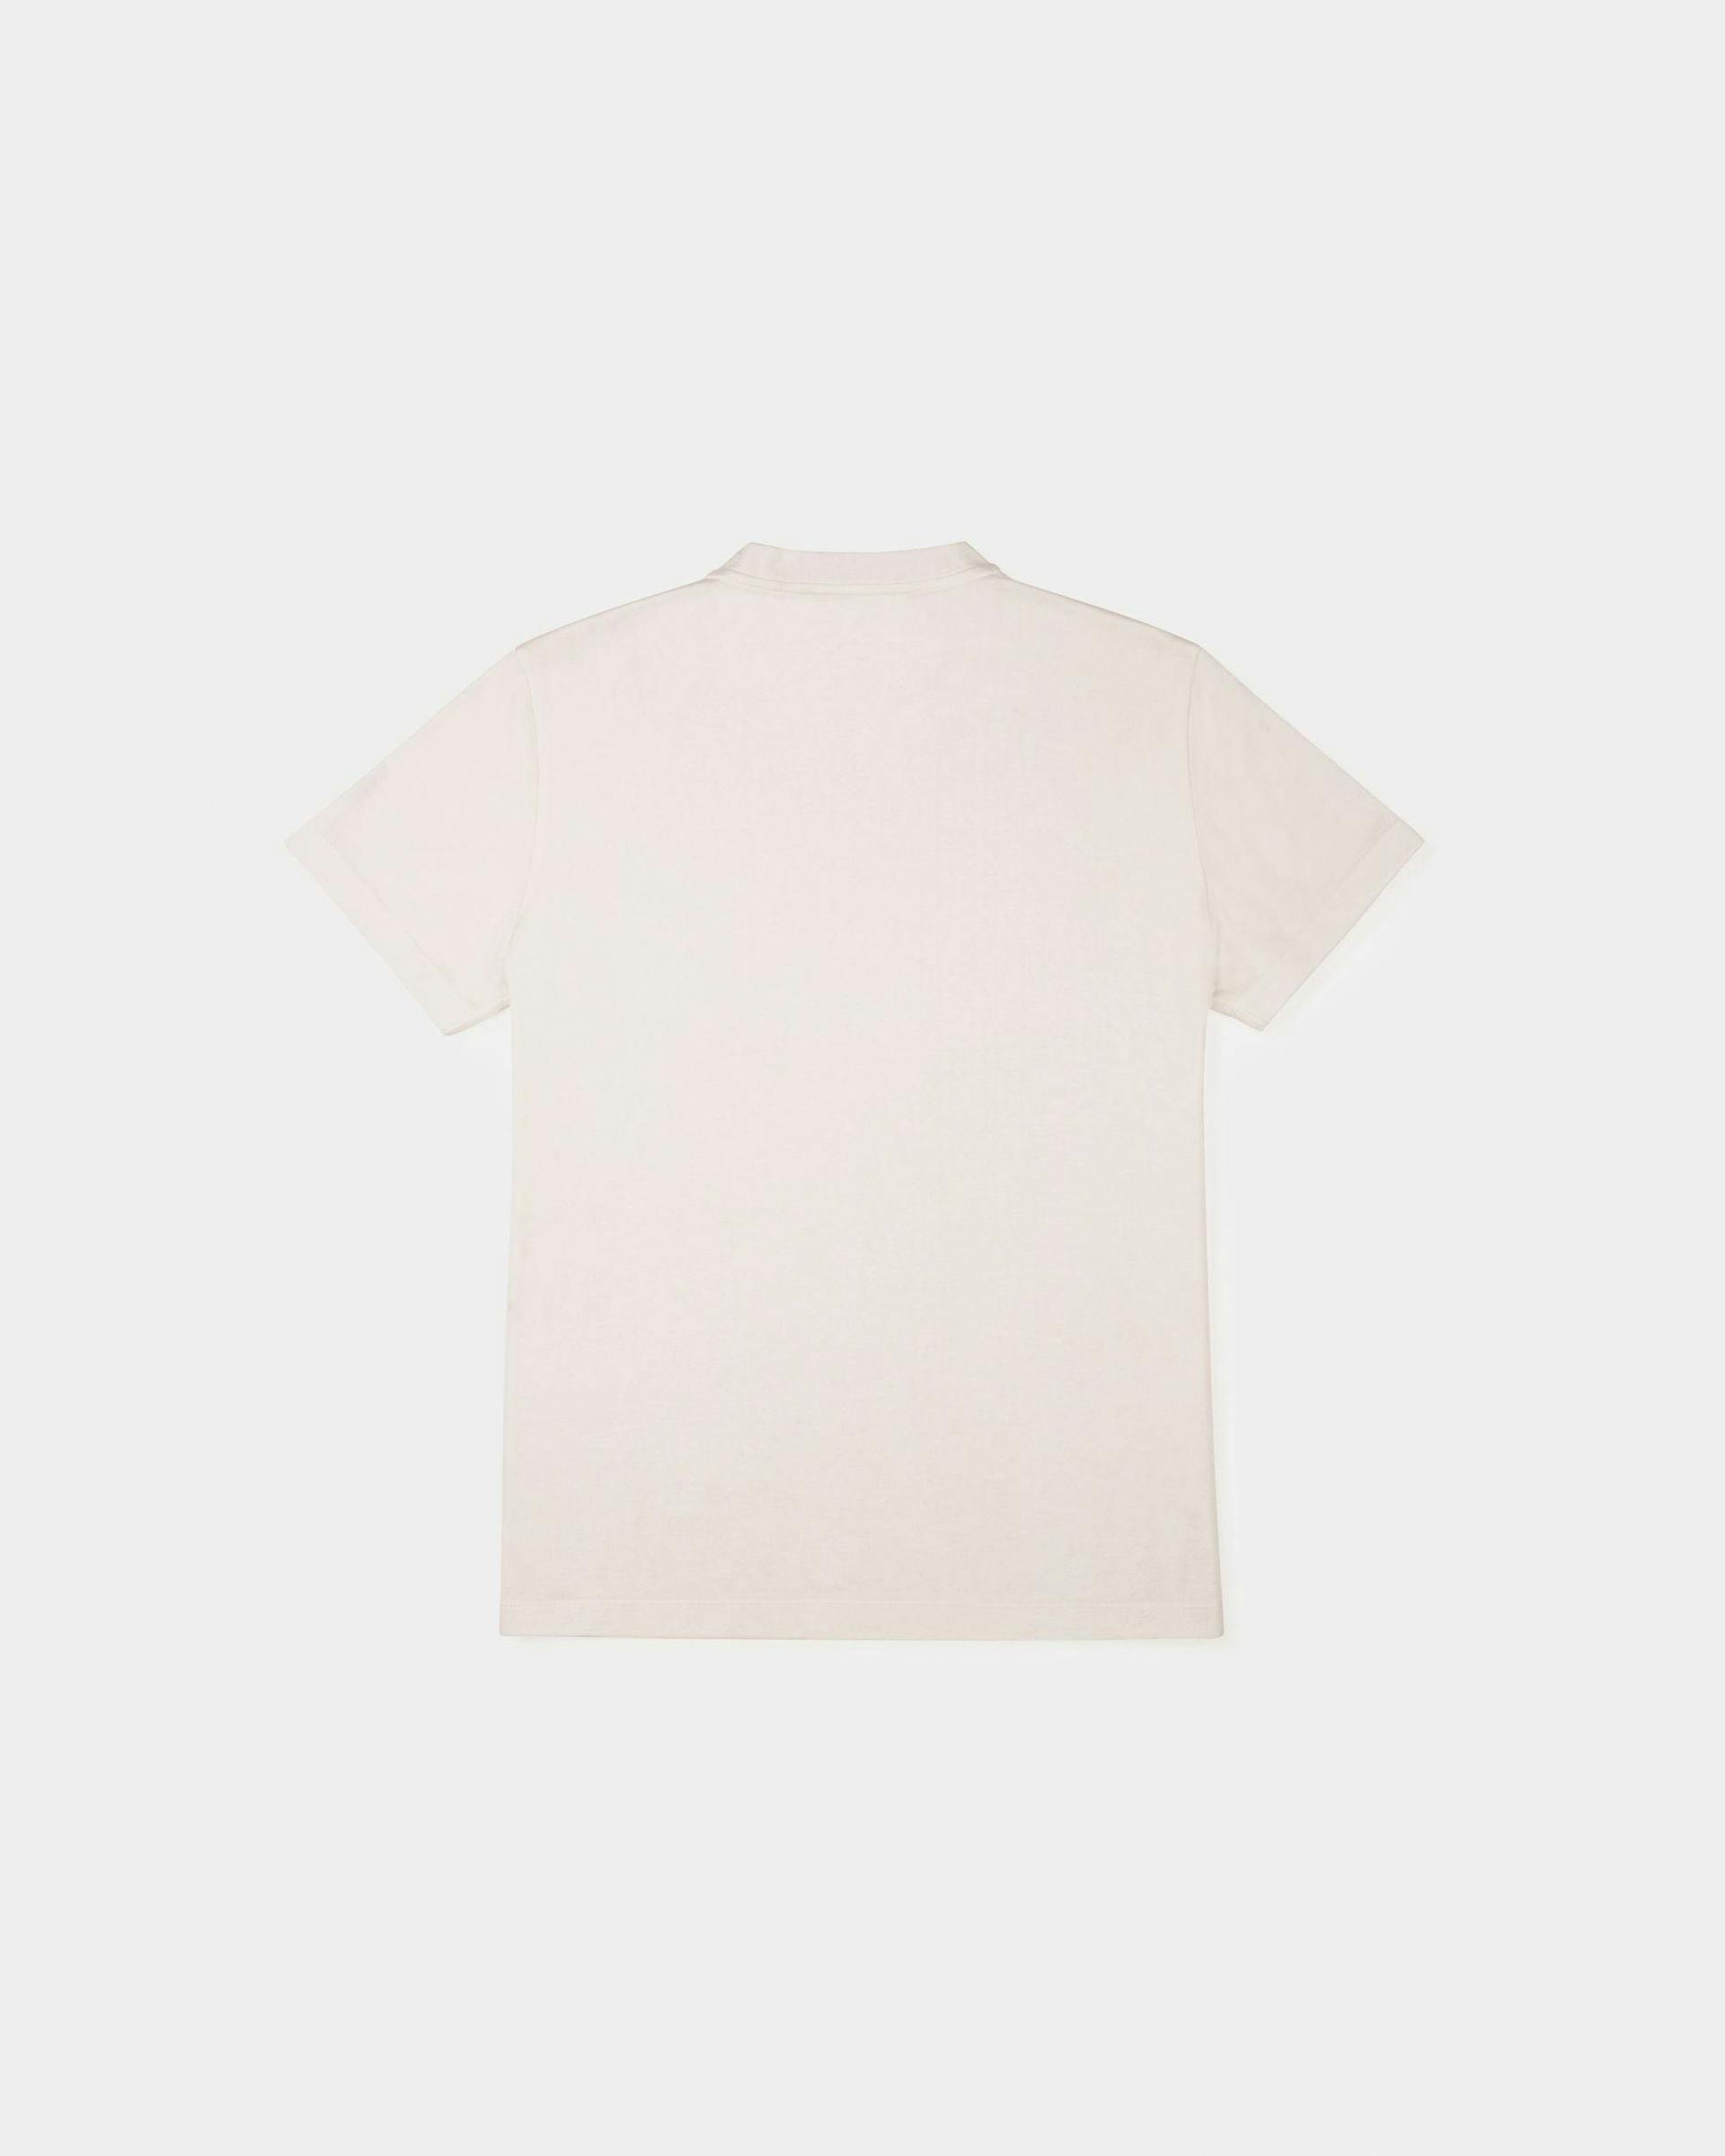 Cotton T-Shirt In White - Women's - Bally - 02